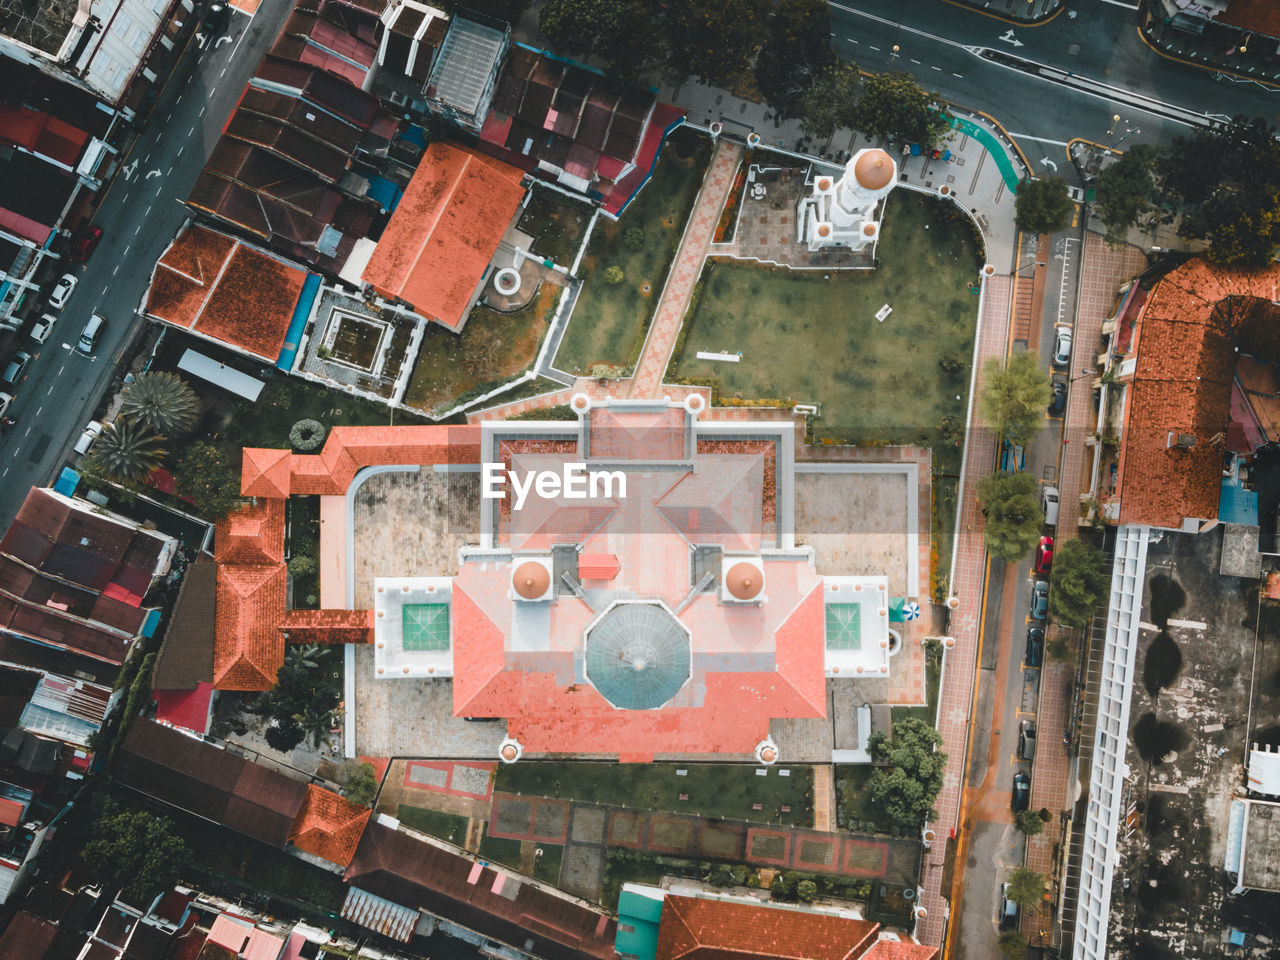 Kapitan keling mosque top-down aerial drone view at george town, penang, malaysia